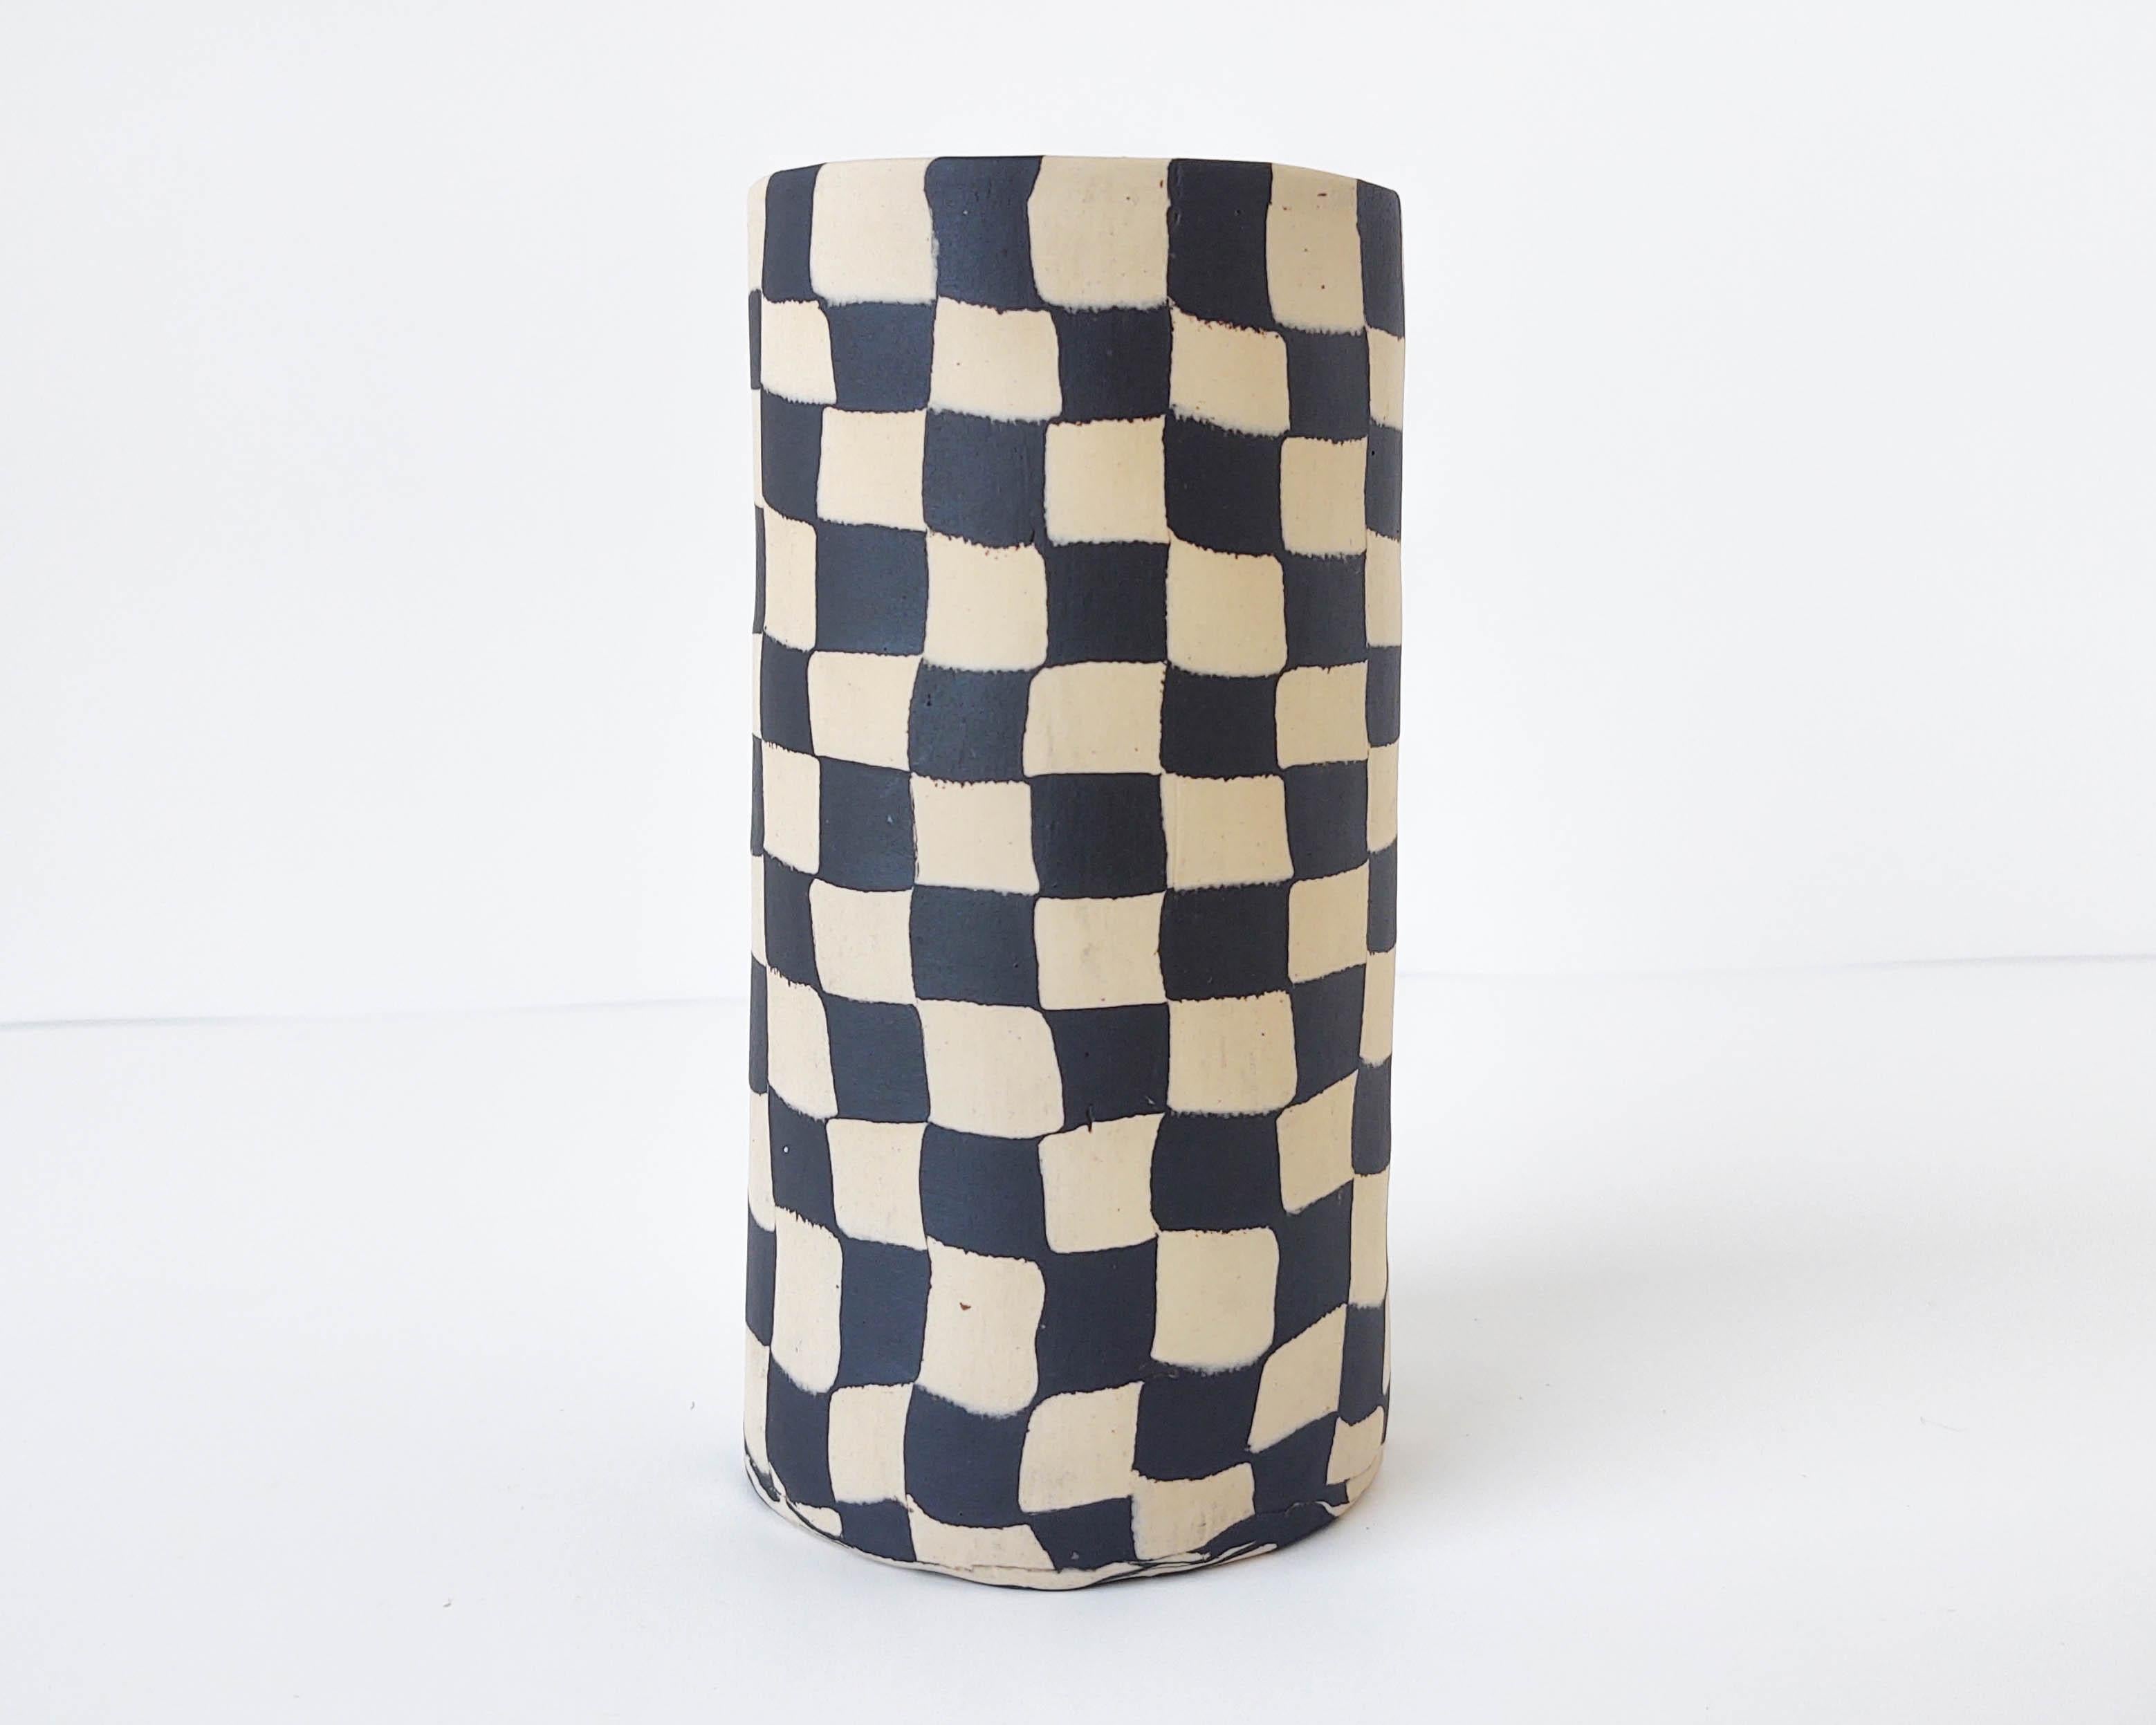 Contemporary Handmade Nerikomi Black & White Checkered Ceramic Vase by Fizzy Ceramics